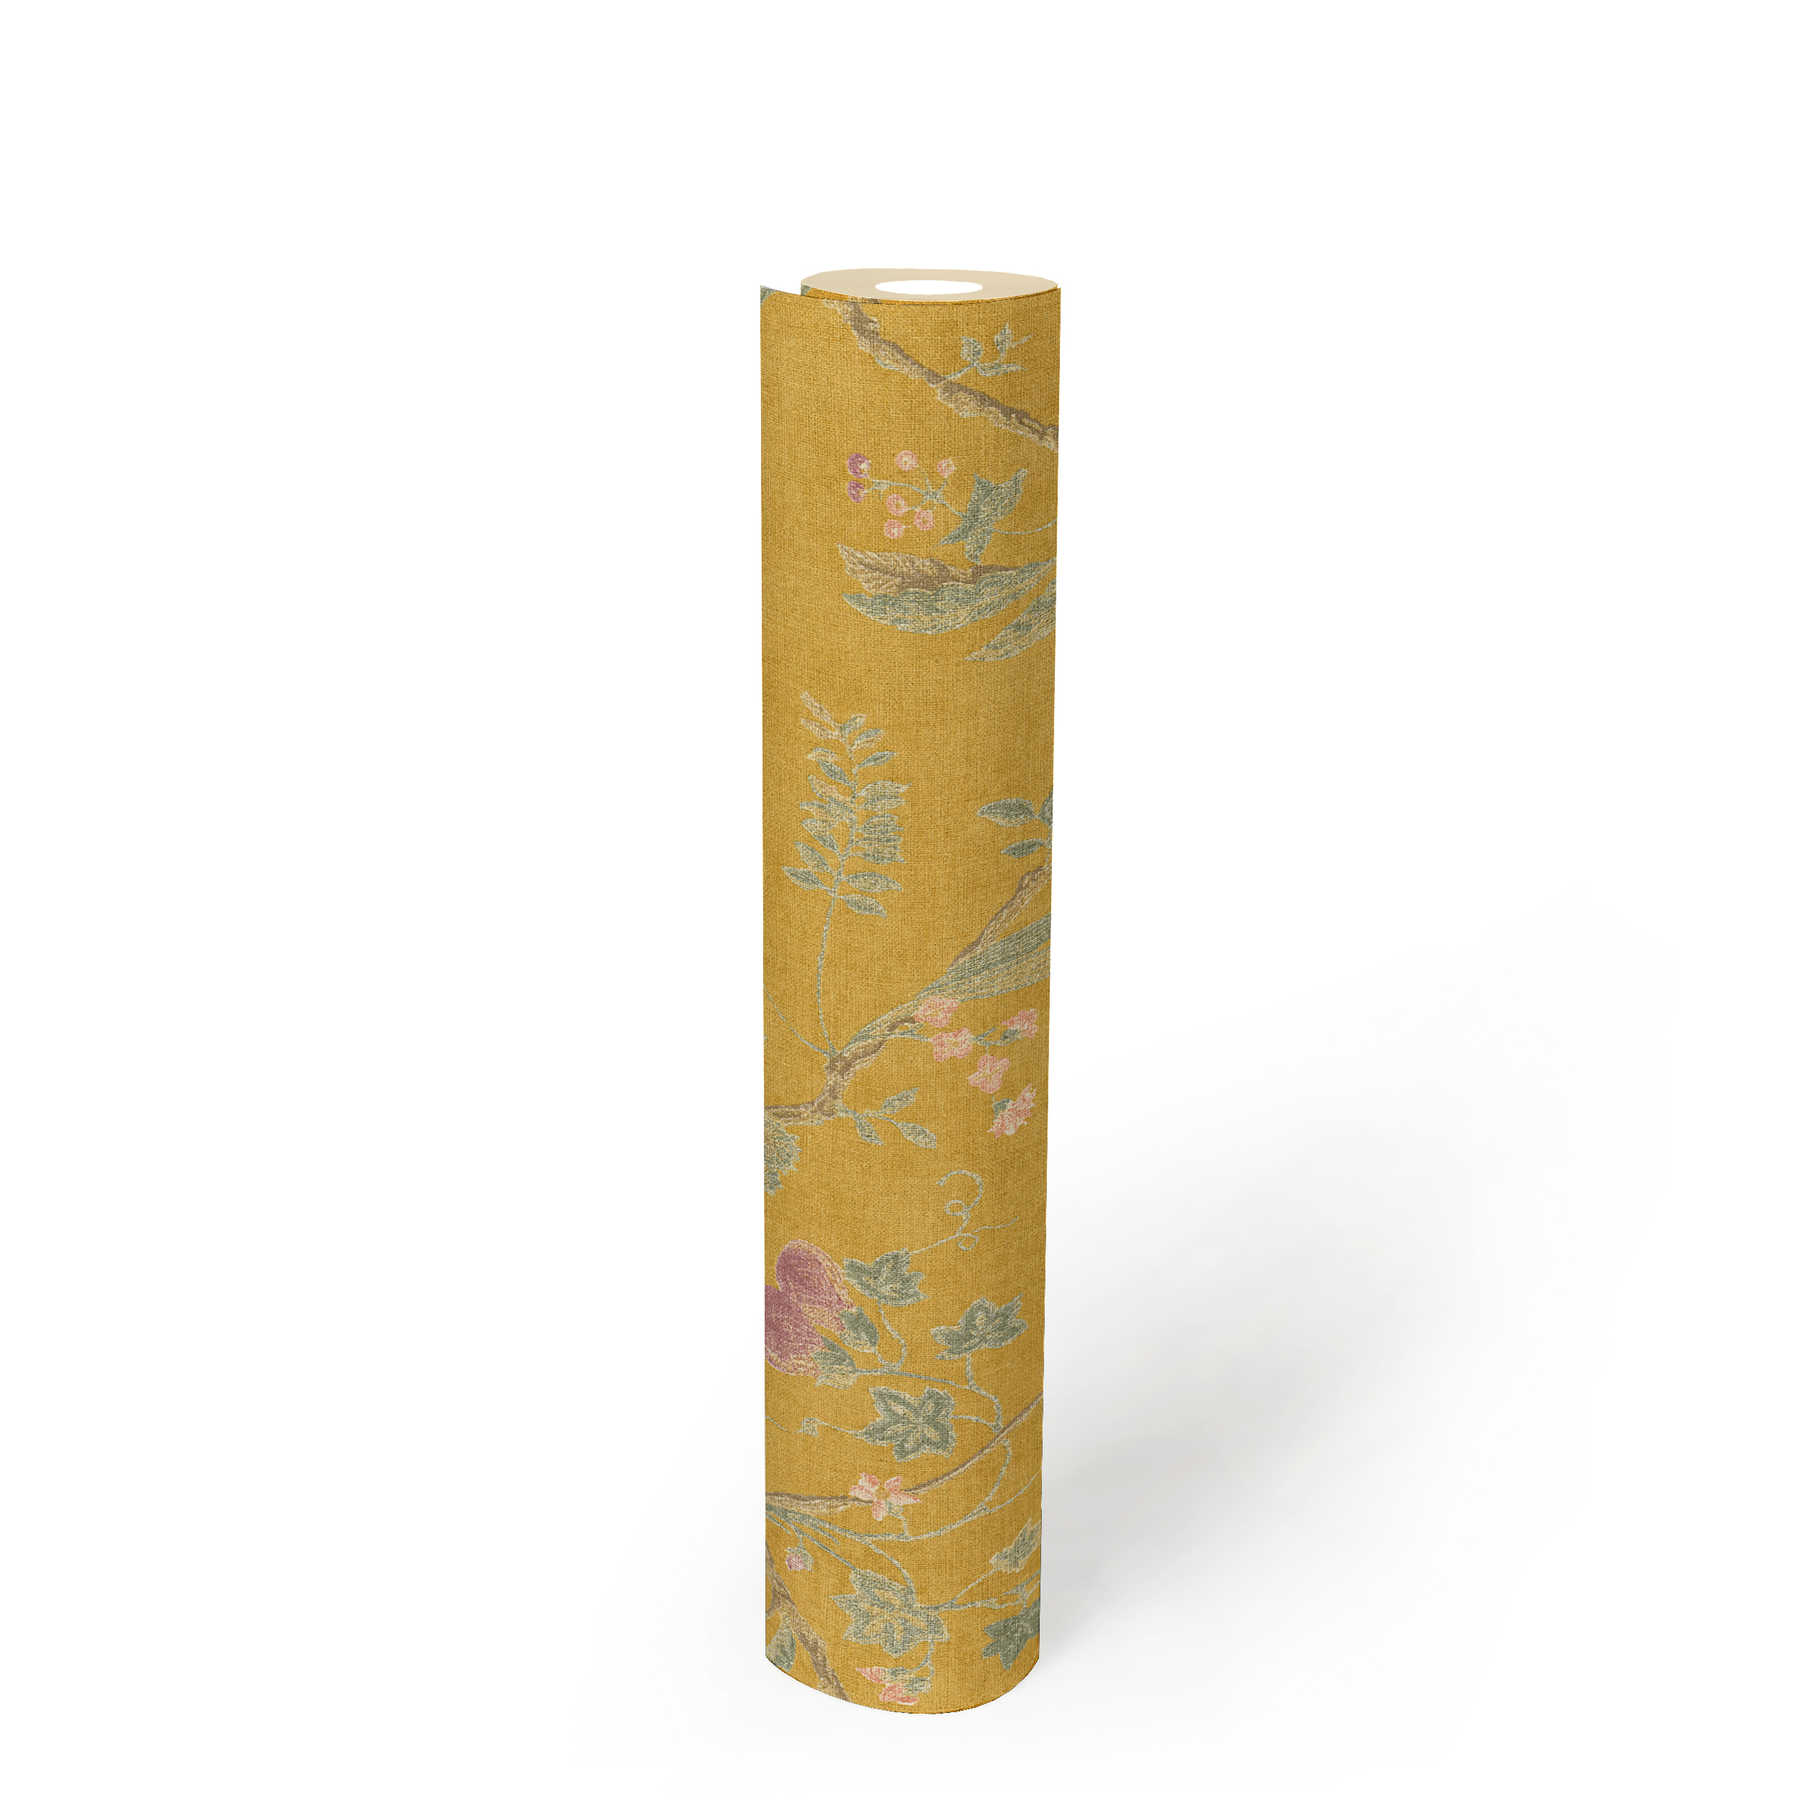             Vintage wallpaper floral pattern & linen look - yellow
        